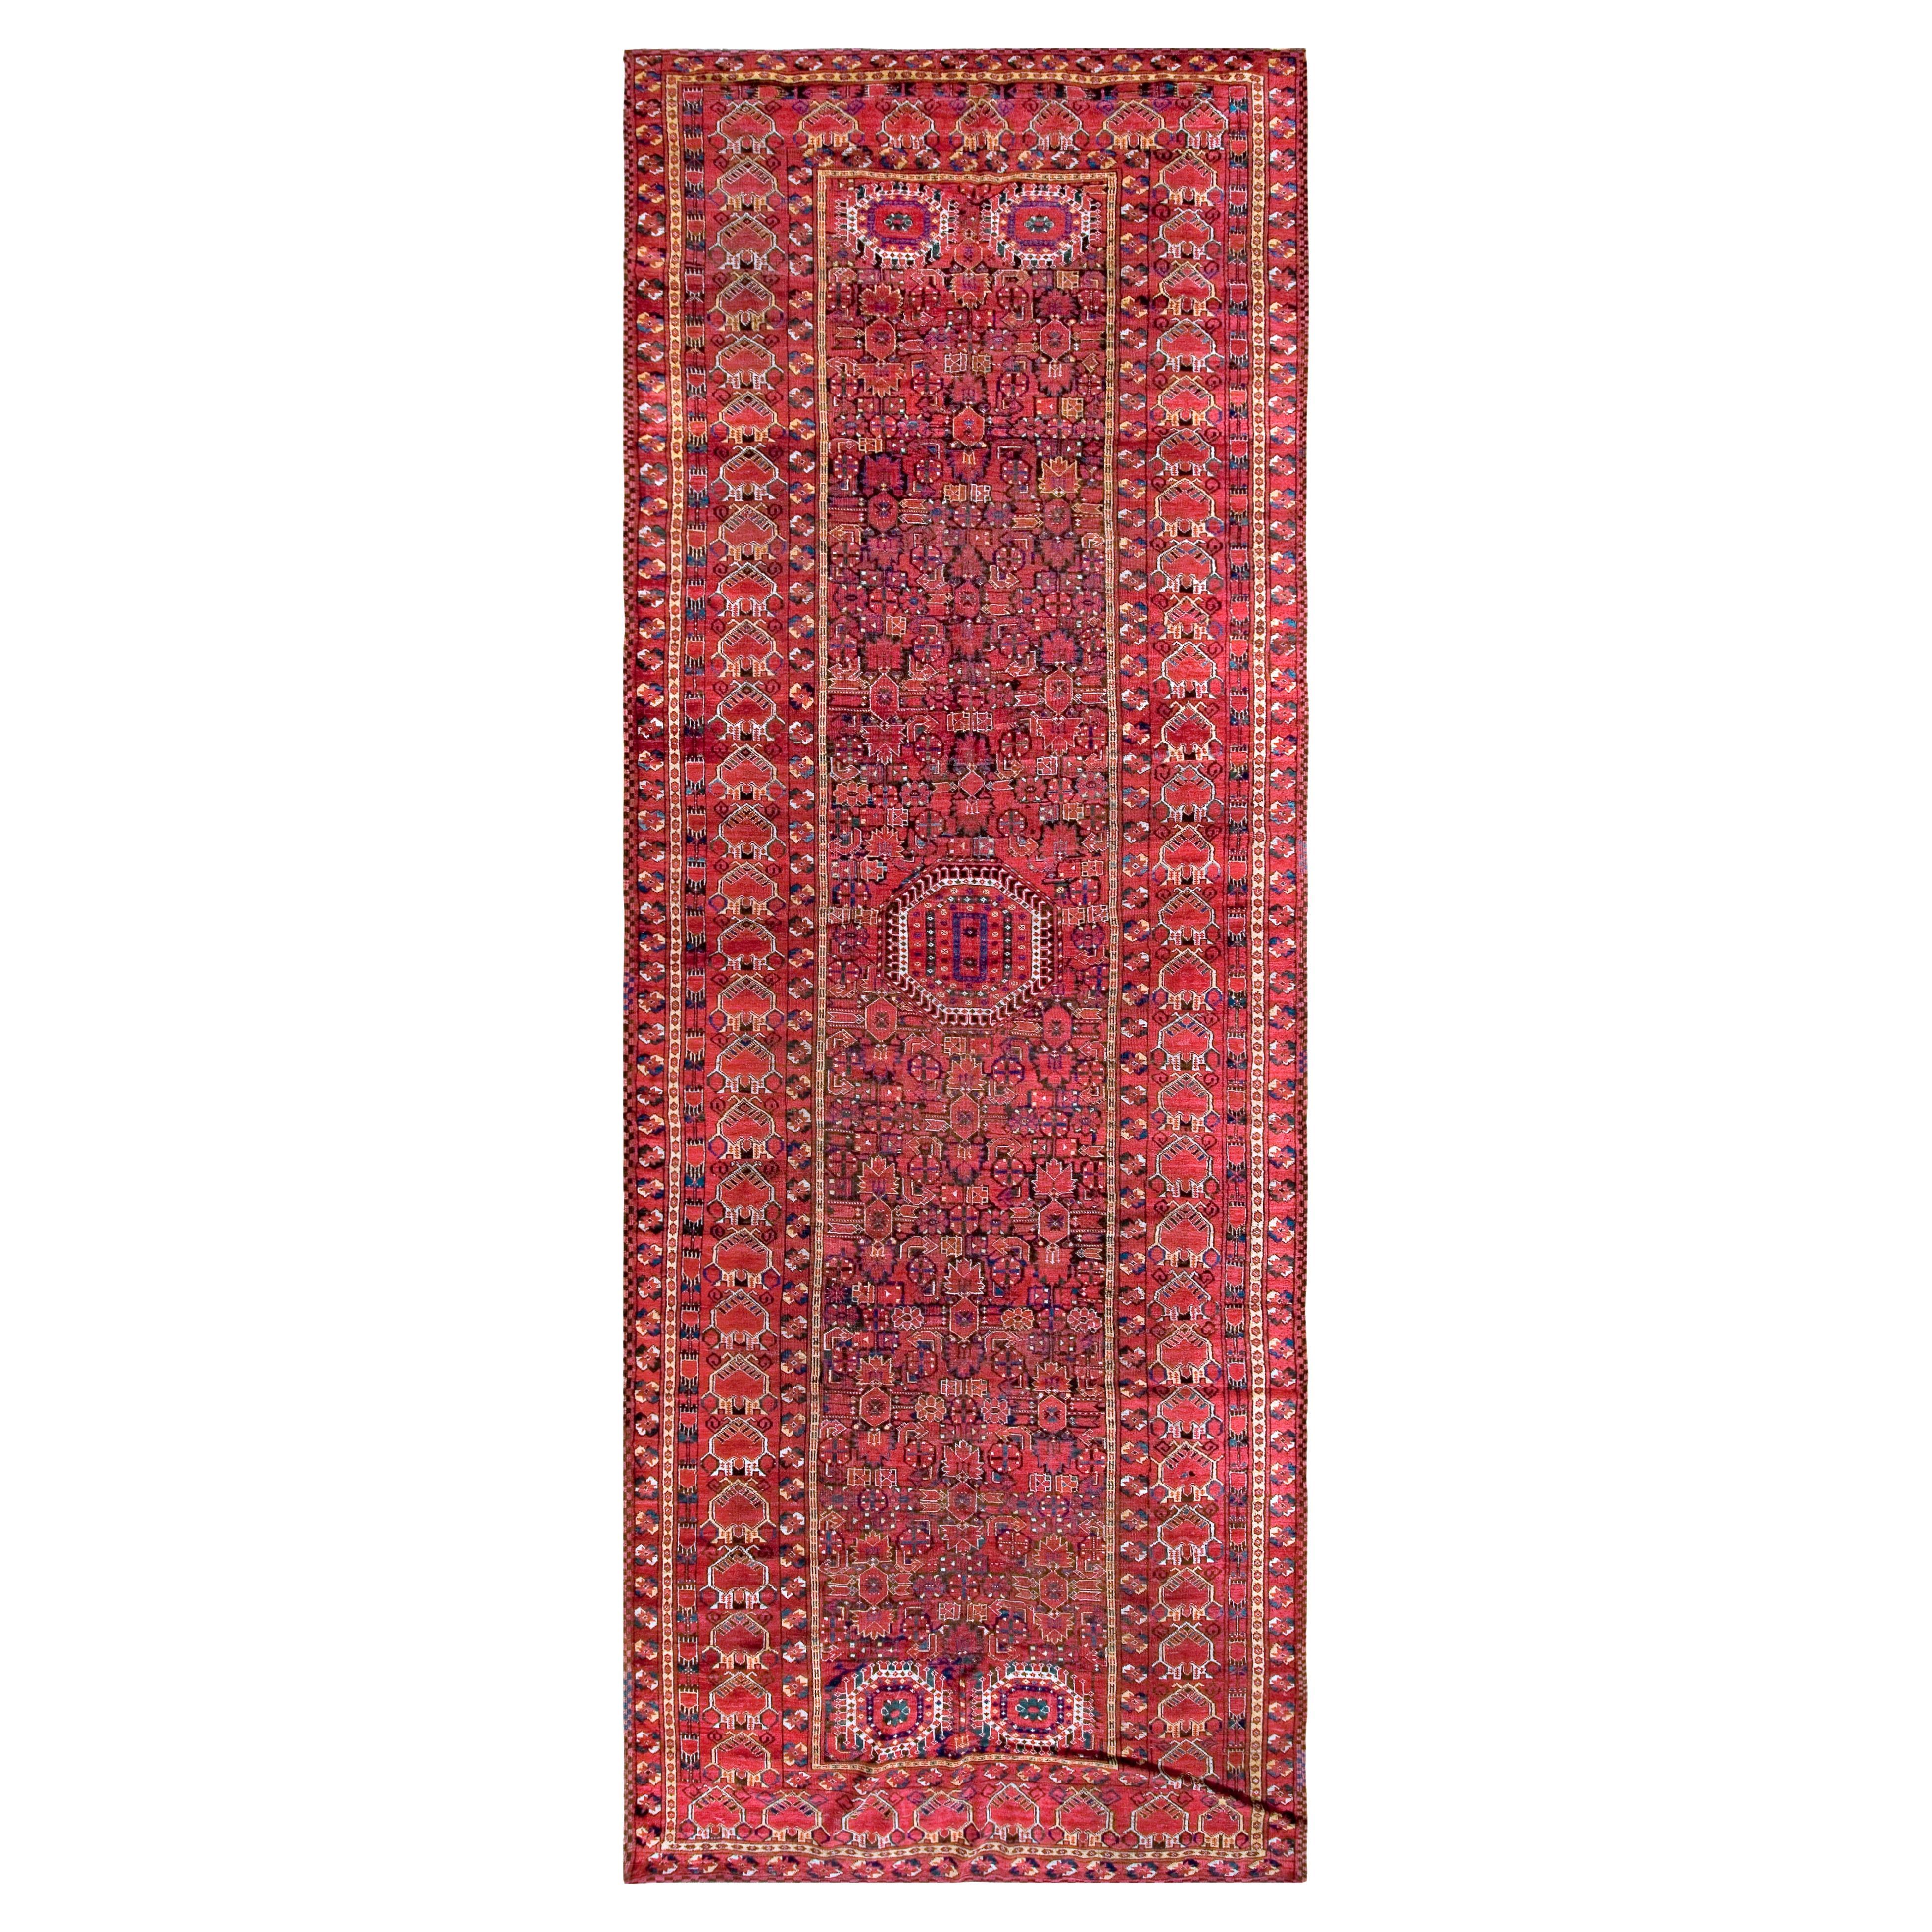 19th Century Central Asian Ersari-Beshir Gallery Carpet (6'6"x18'-198x548)  